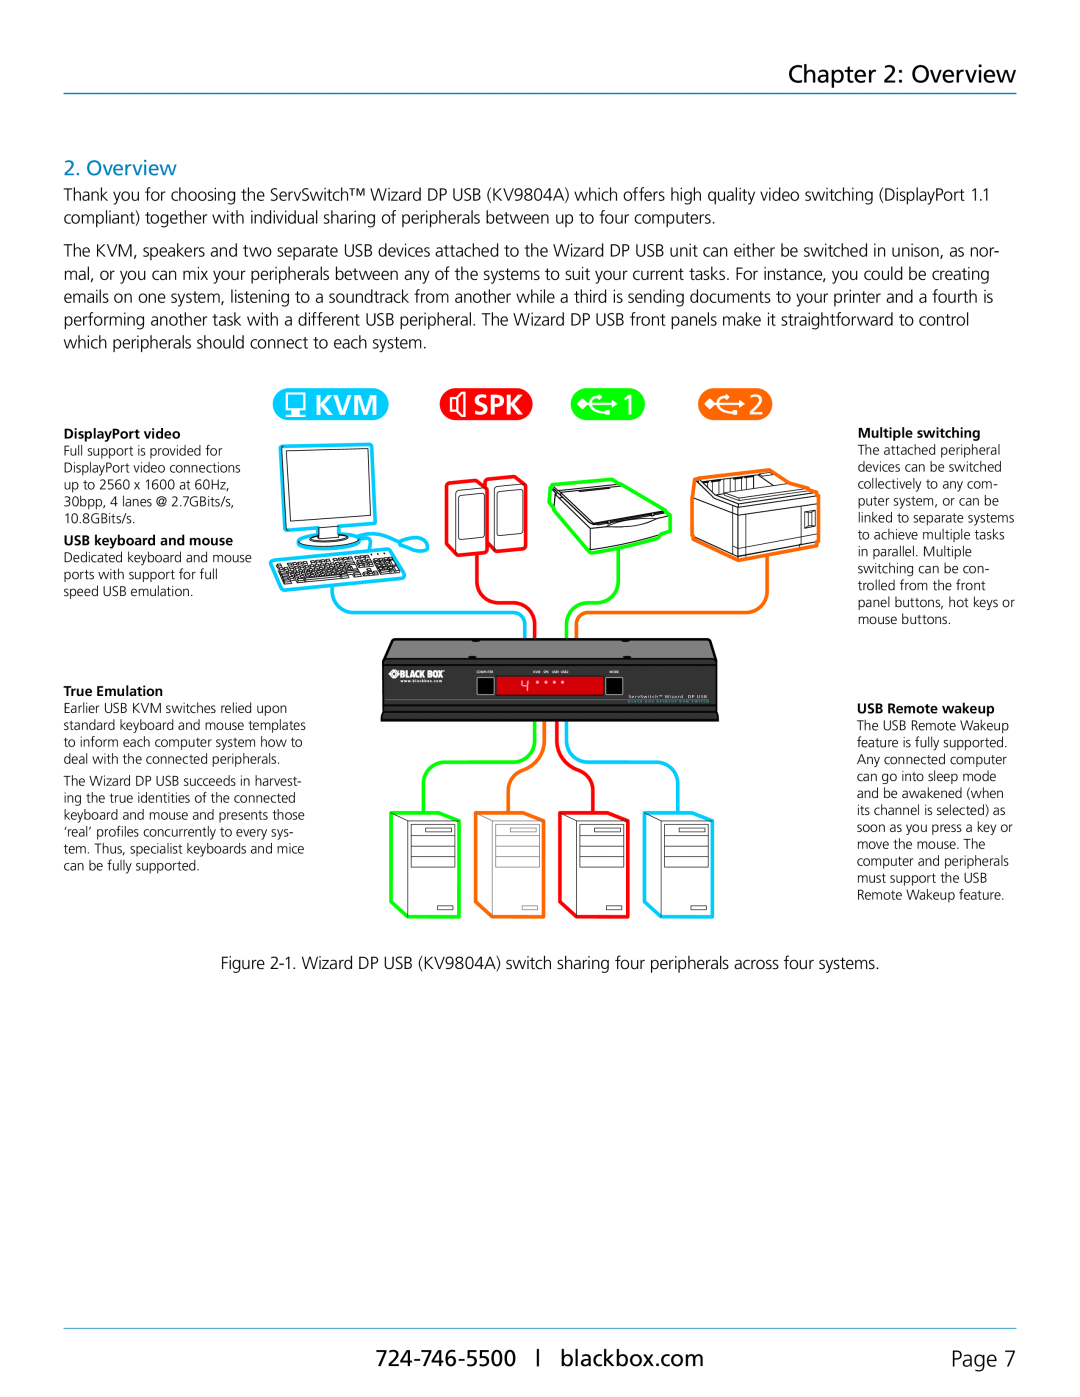 Black Box KV9804A, ServSwitch Wizard DP USB manual Overview, Kvm Spk, Page 